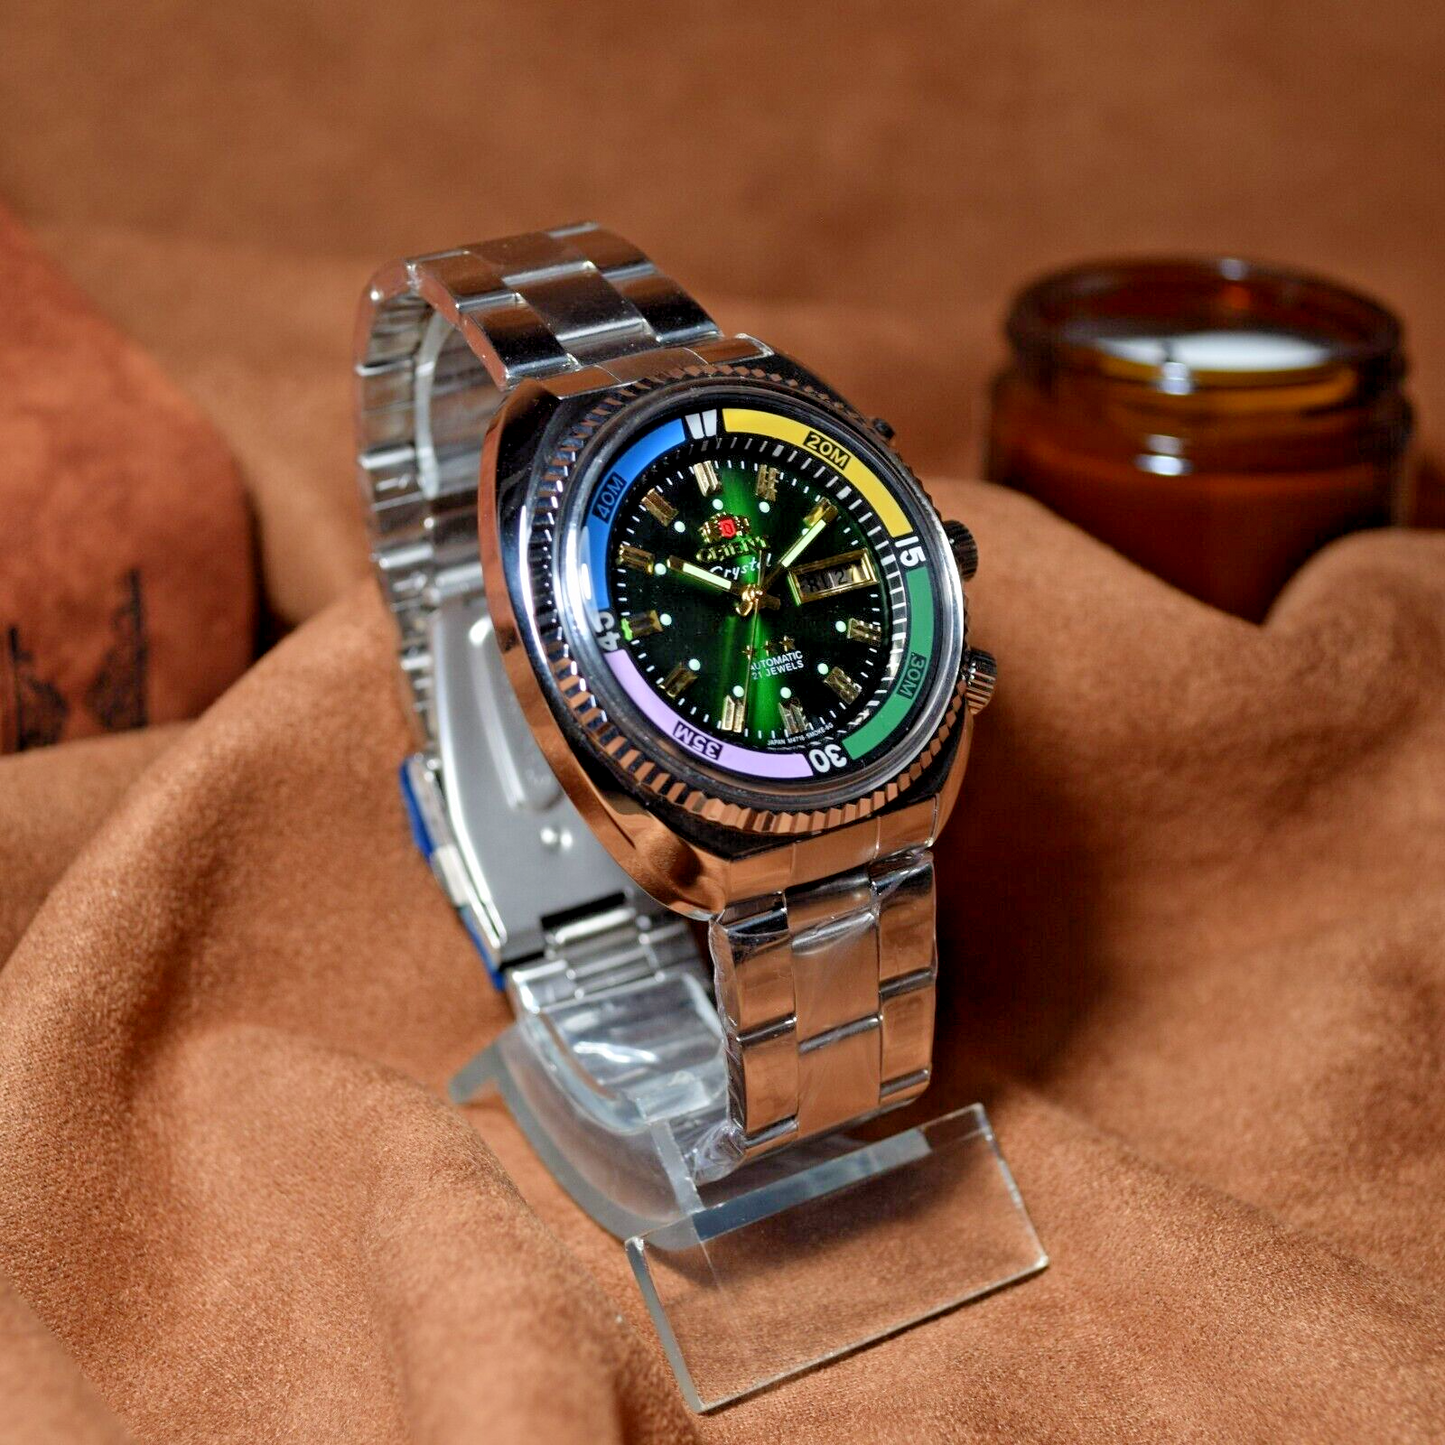 Japan Watch Orient KING DIVER Automatic watch KD Green Dial 21 JEWEL Original